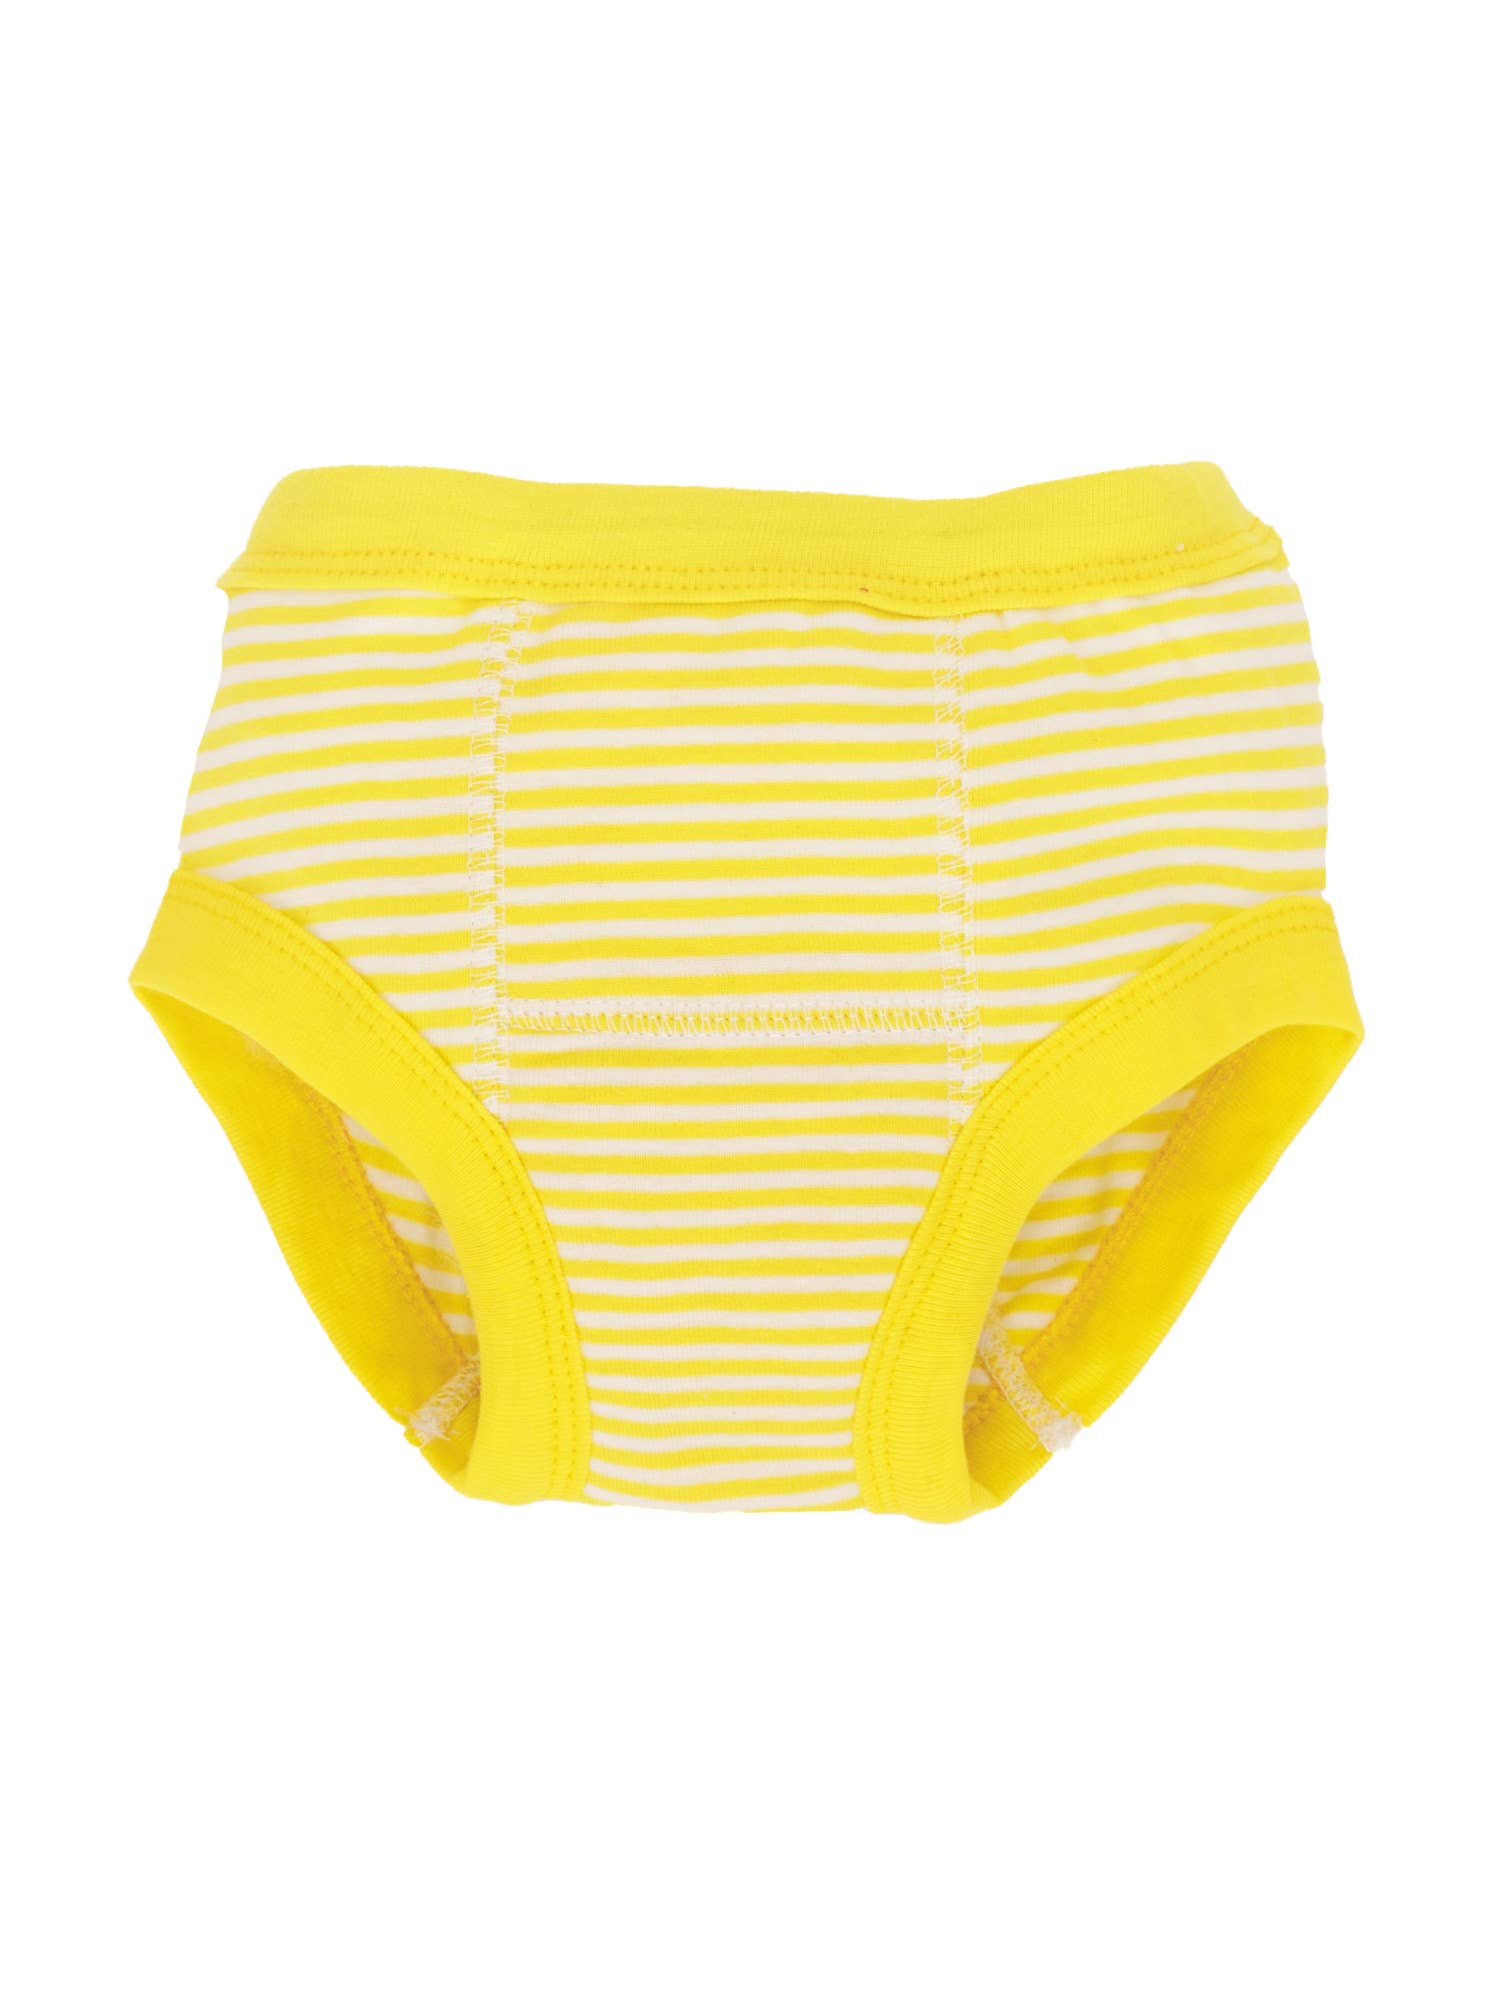 Yellow Stripe Potty Training Pants - Organic Boutique